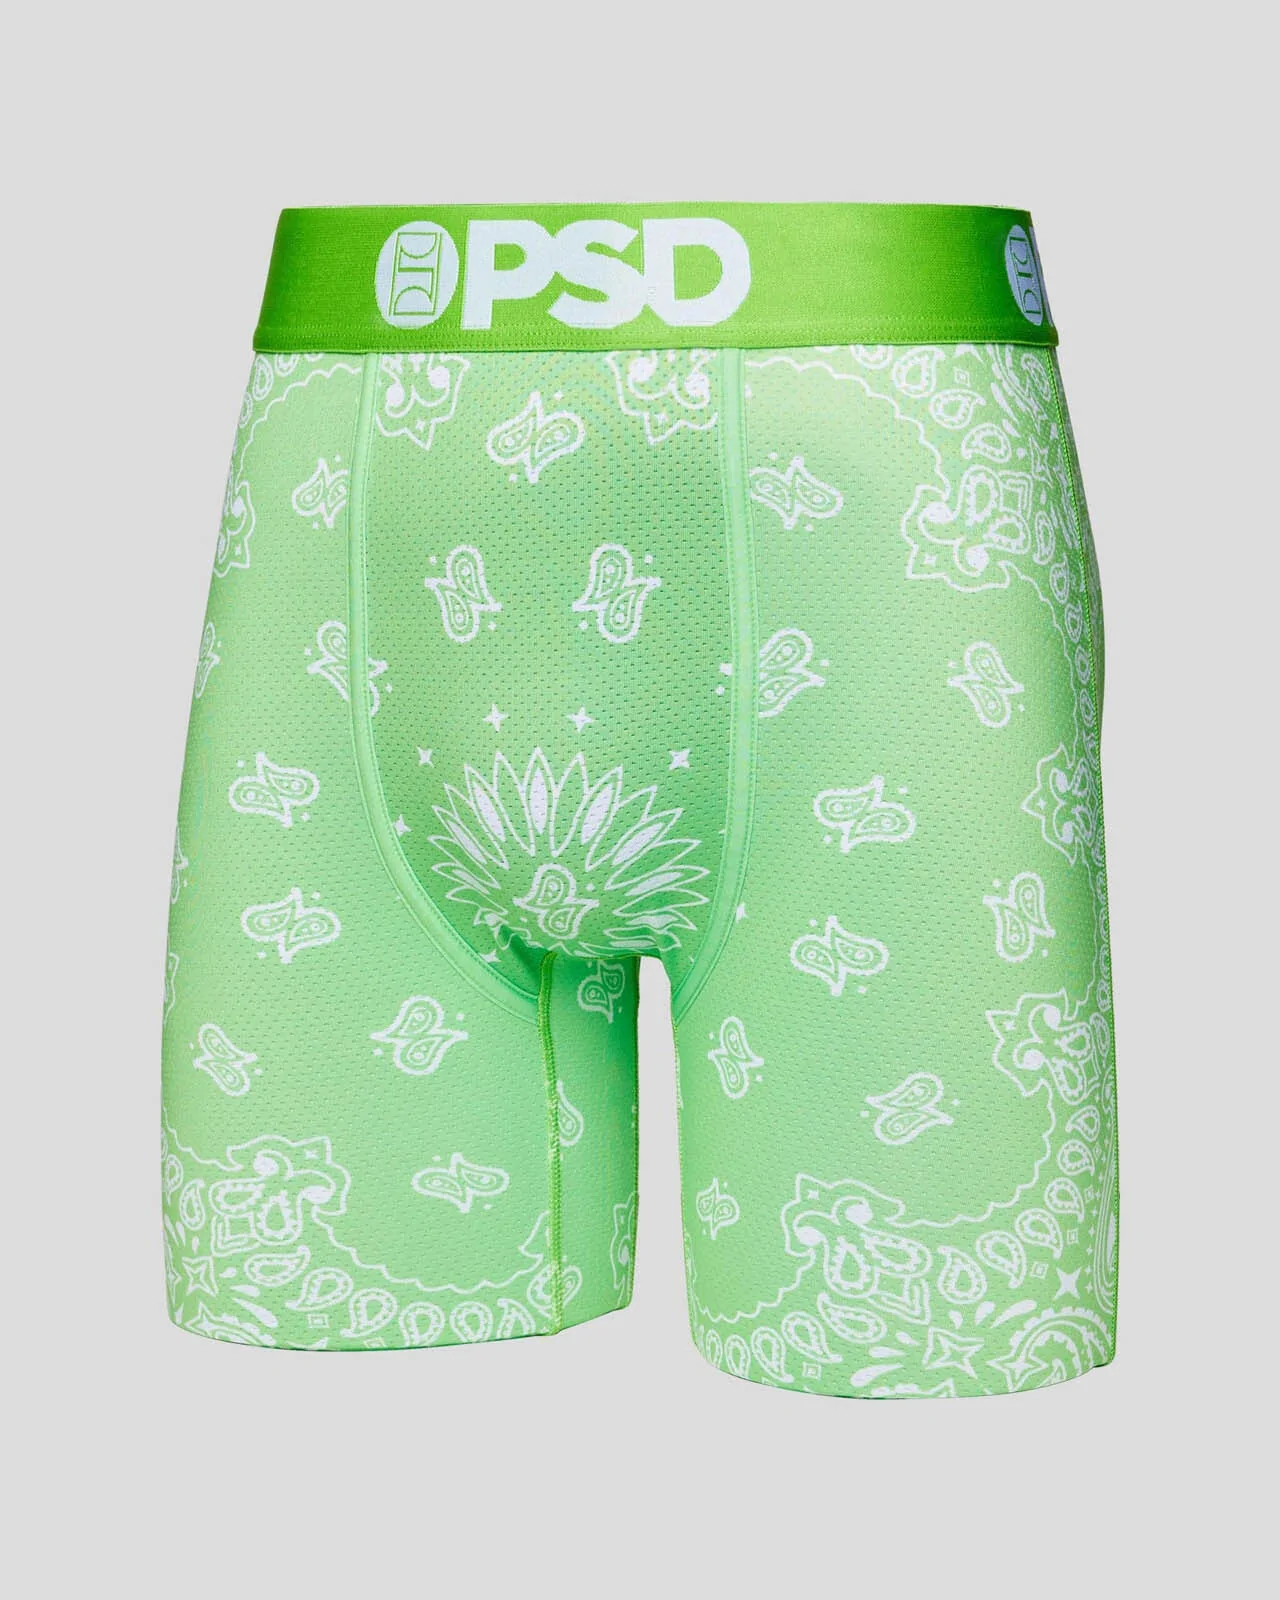 COOL MESH - NEON BANDANA Boxer Brief - PSD Underwear